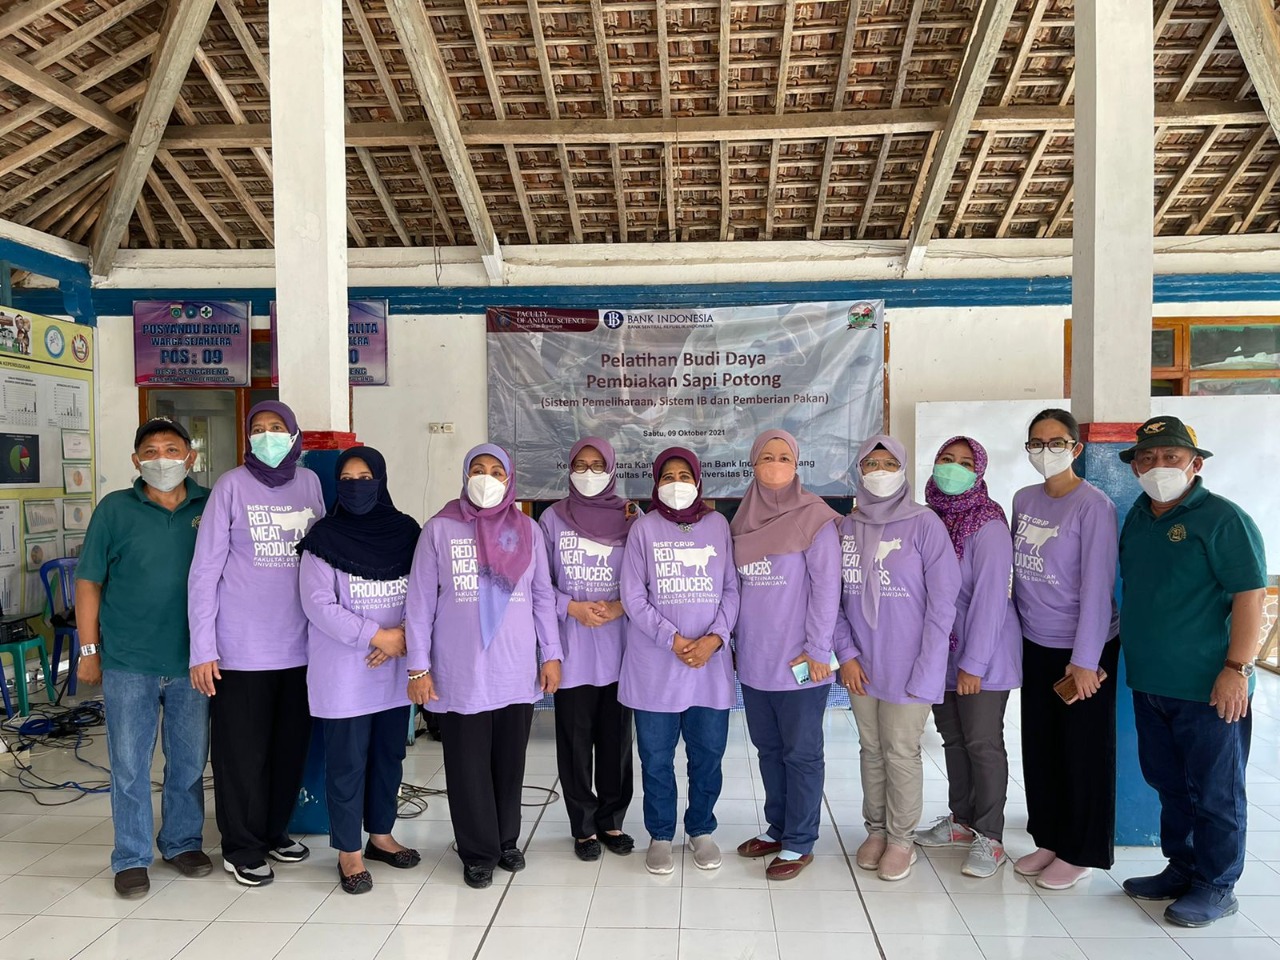 Upaya RG Red Meat Producer Wujudkan Klaster Pembiakan Sapi Potong di Kabupaten Malang